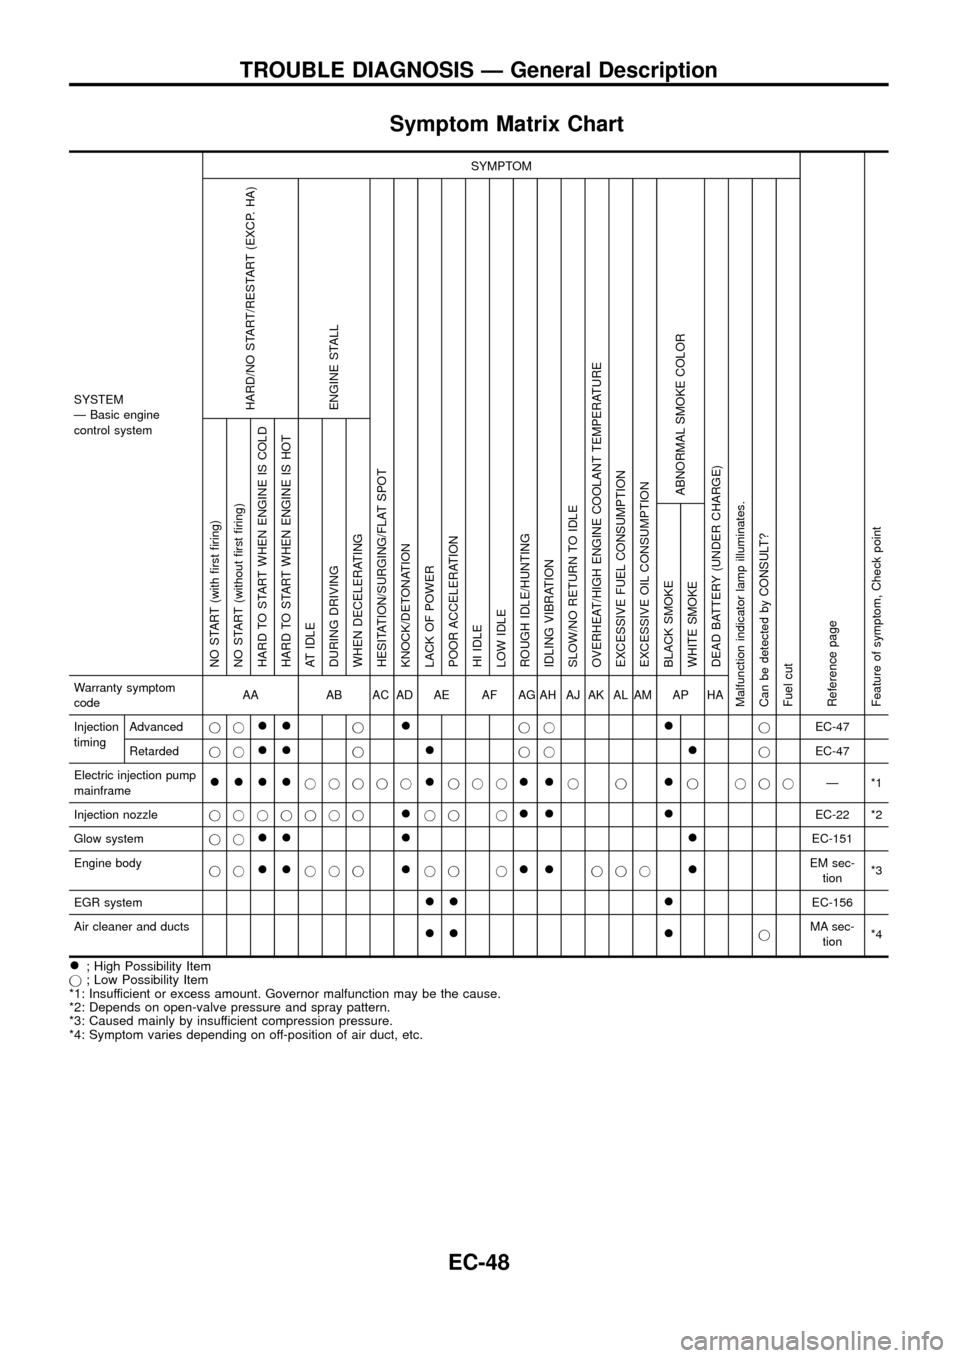 NISSAN PATROL 1998 Y61 / 5.G Engine Control Workshop Manual Symptom Matrix Chart
SYSTEM
Ð Basic engine
control systemSYMPTOM
Reference page
Feature of symptom, Check pointHARD/NO START/RESTART (EXCP. HA)
ENGINE STALL
HESITATION/SURGING/FLAT SPOT
KNOCK/DETONAT